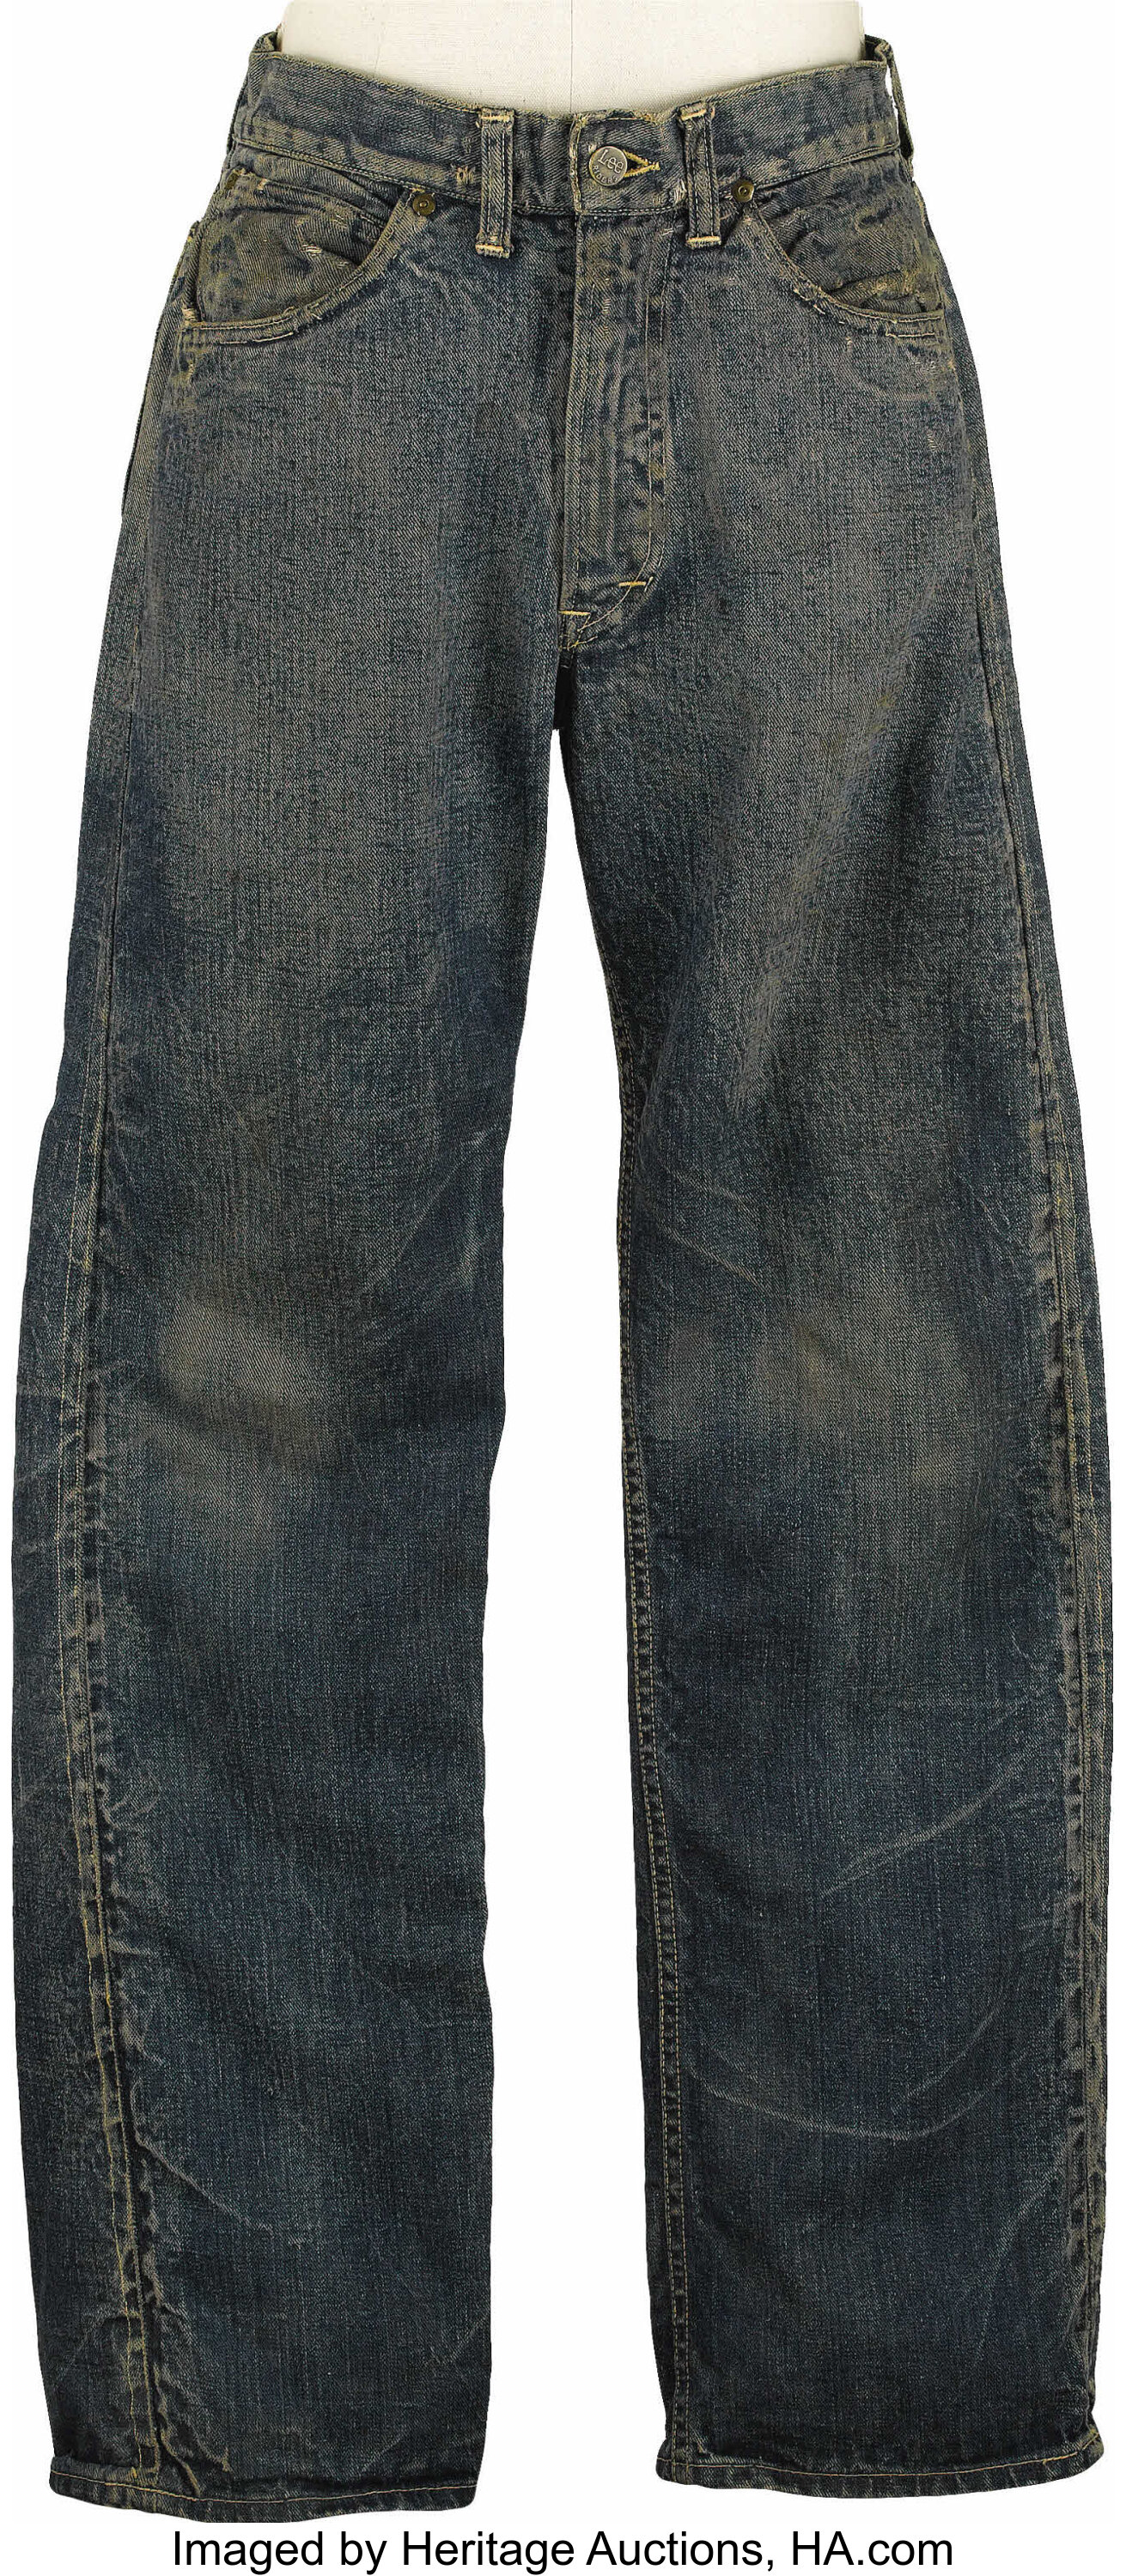 Jeans Worn by James Dean in 